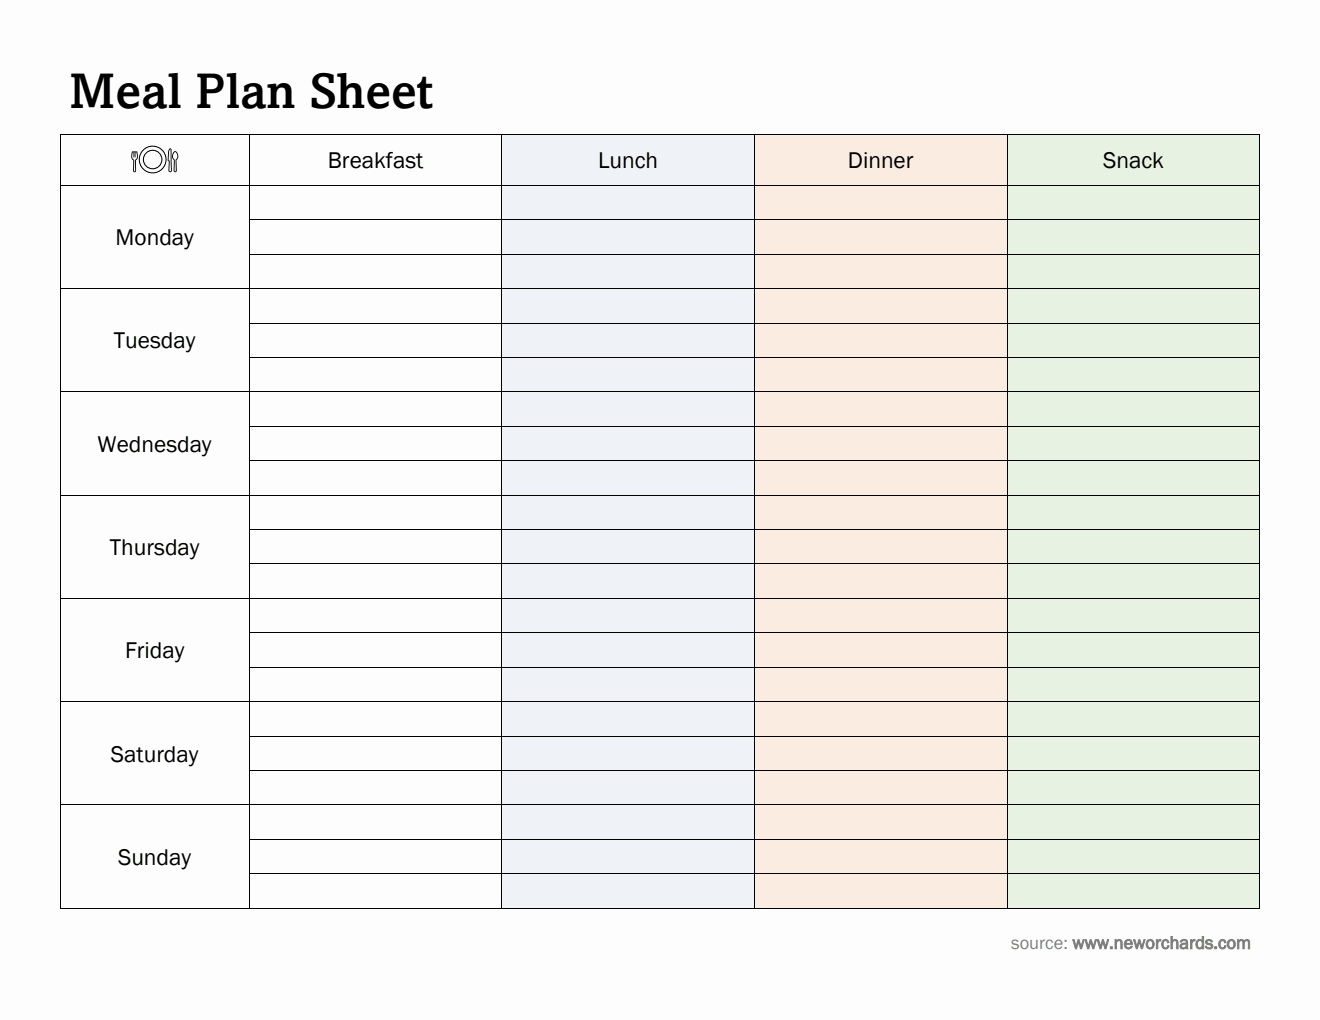 Free Downloadable Meal Plan Sheet in Word Format